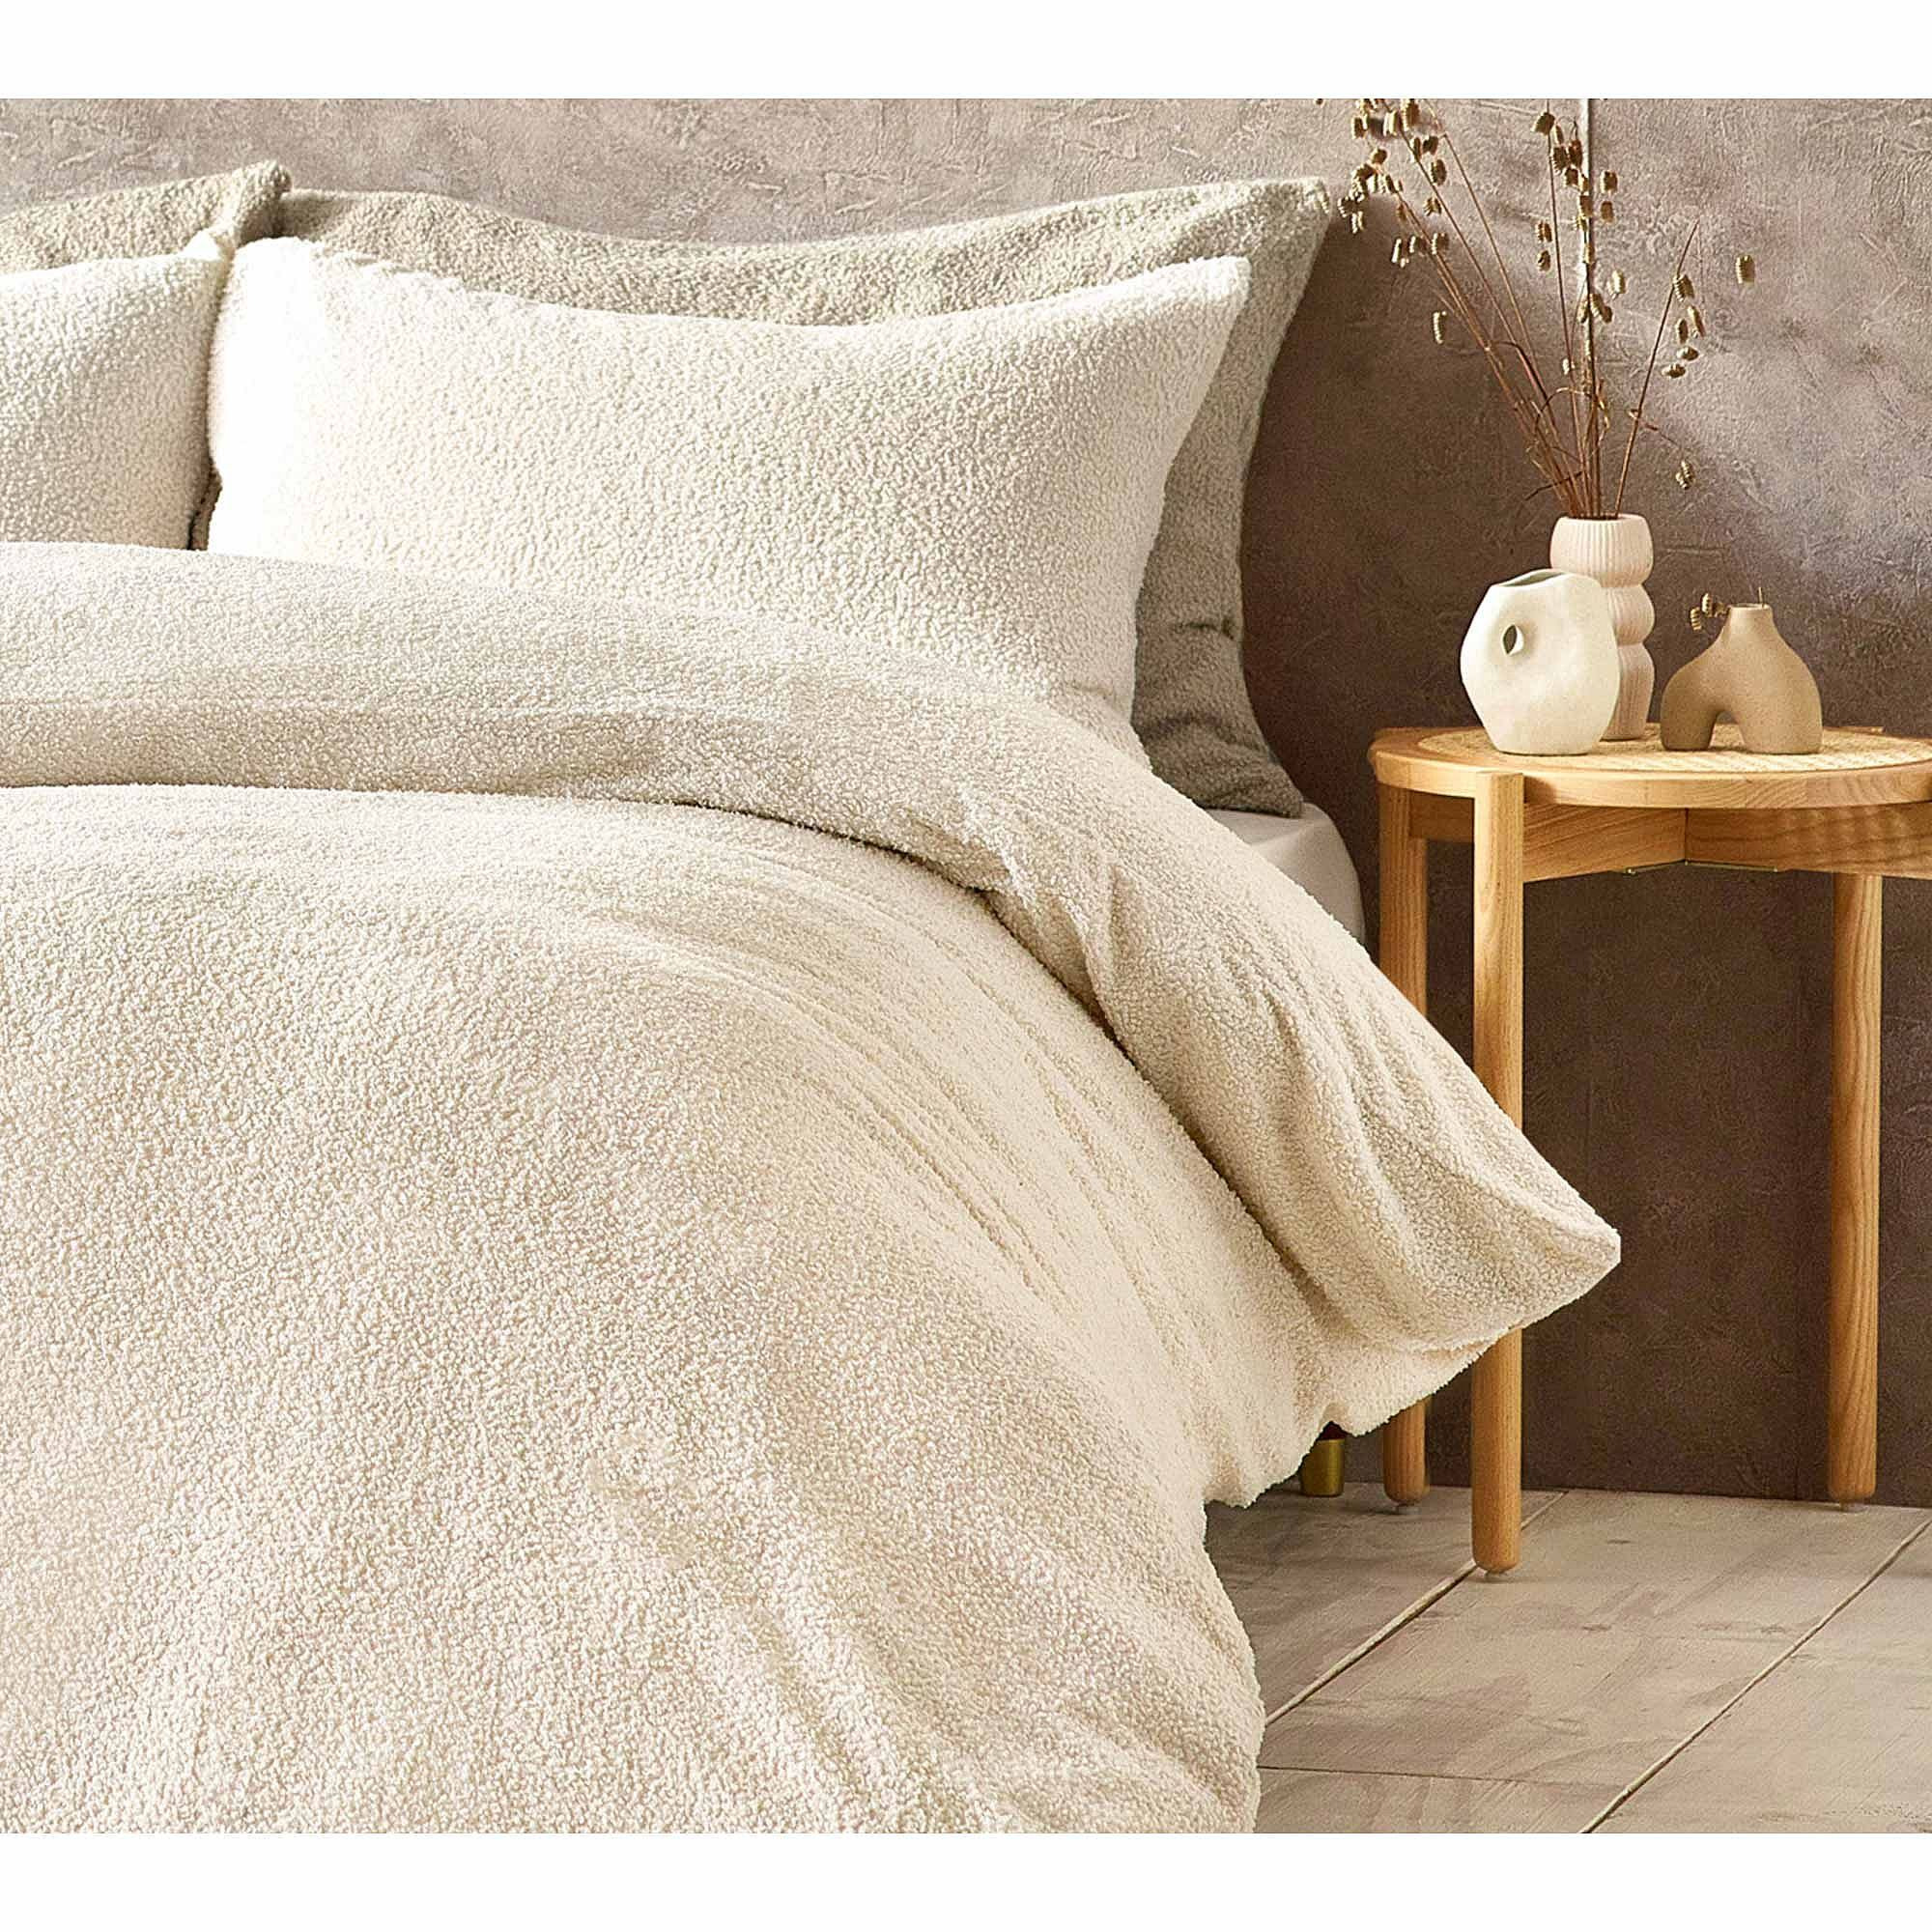 Bouclé Bed Linen Set in Oyster (Single Set) - image 1